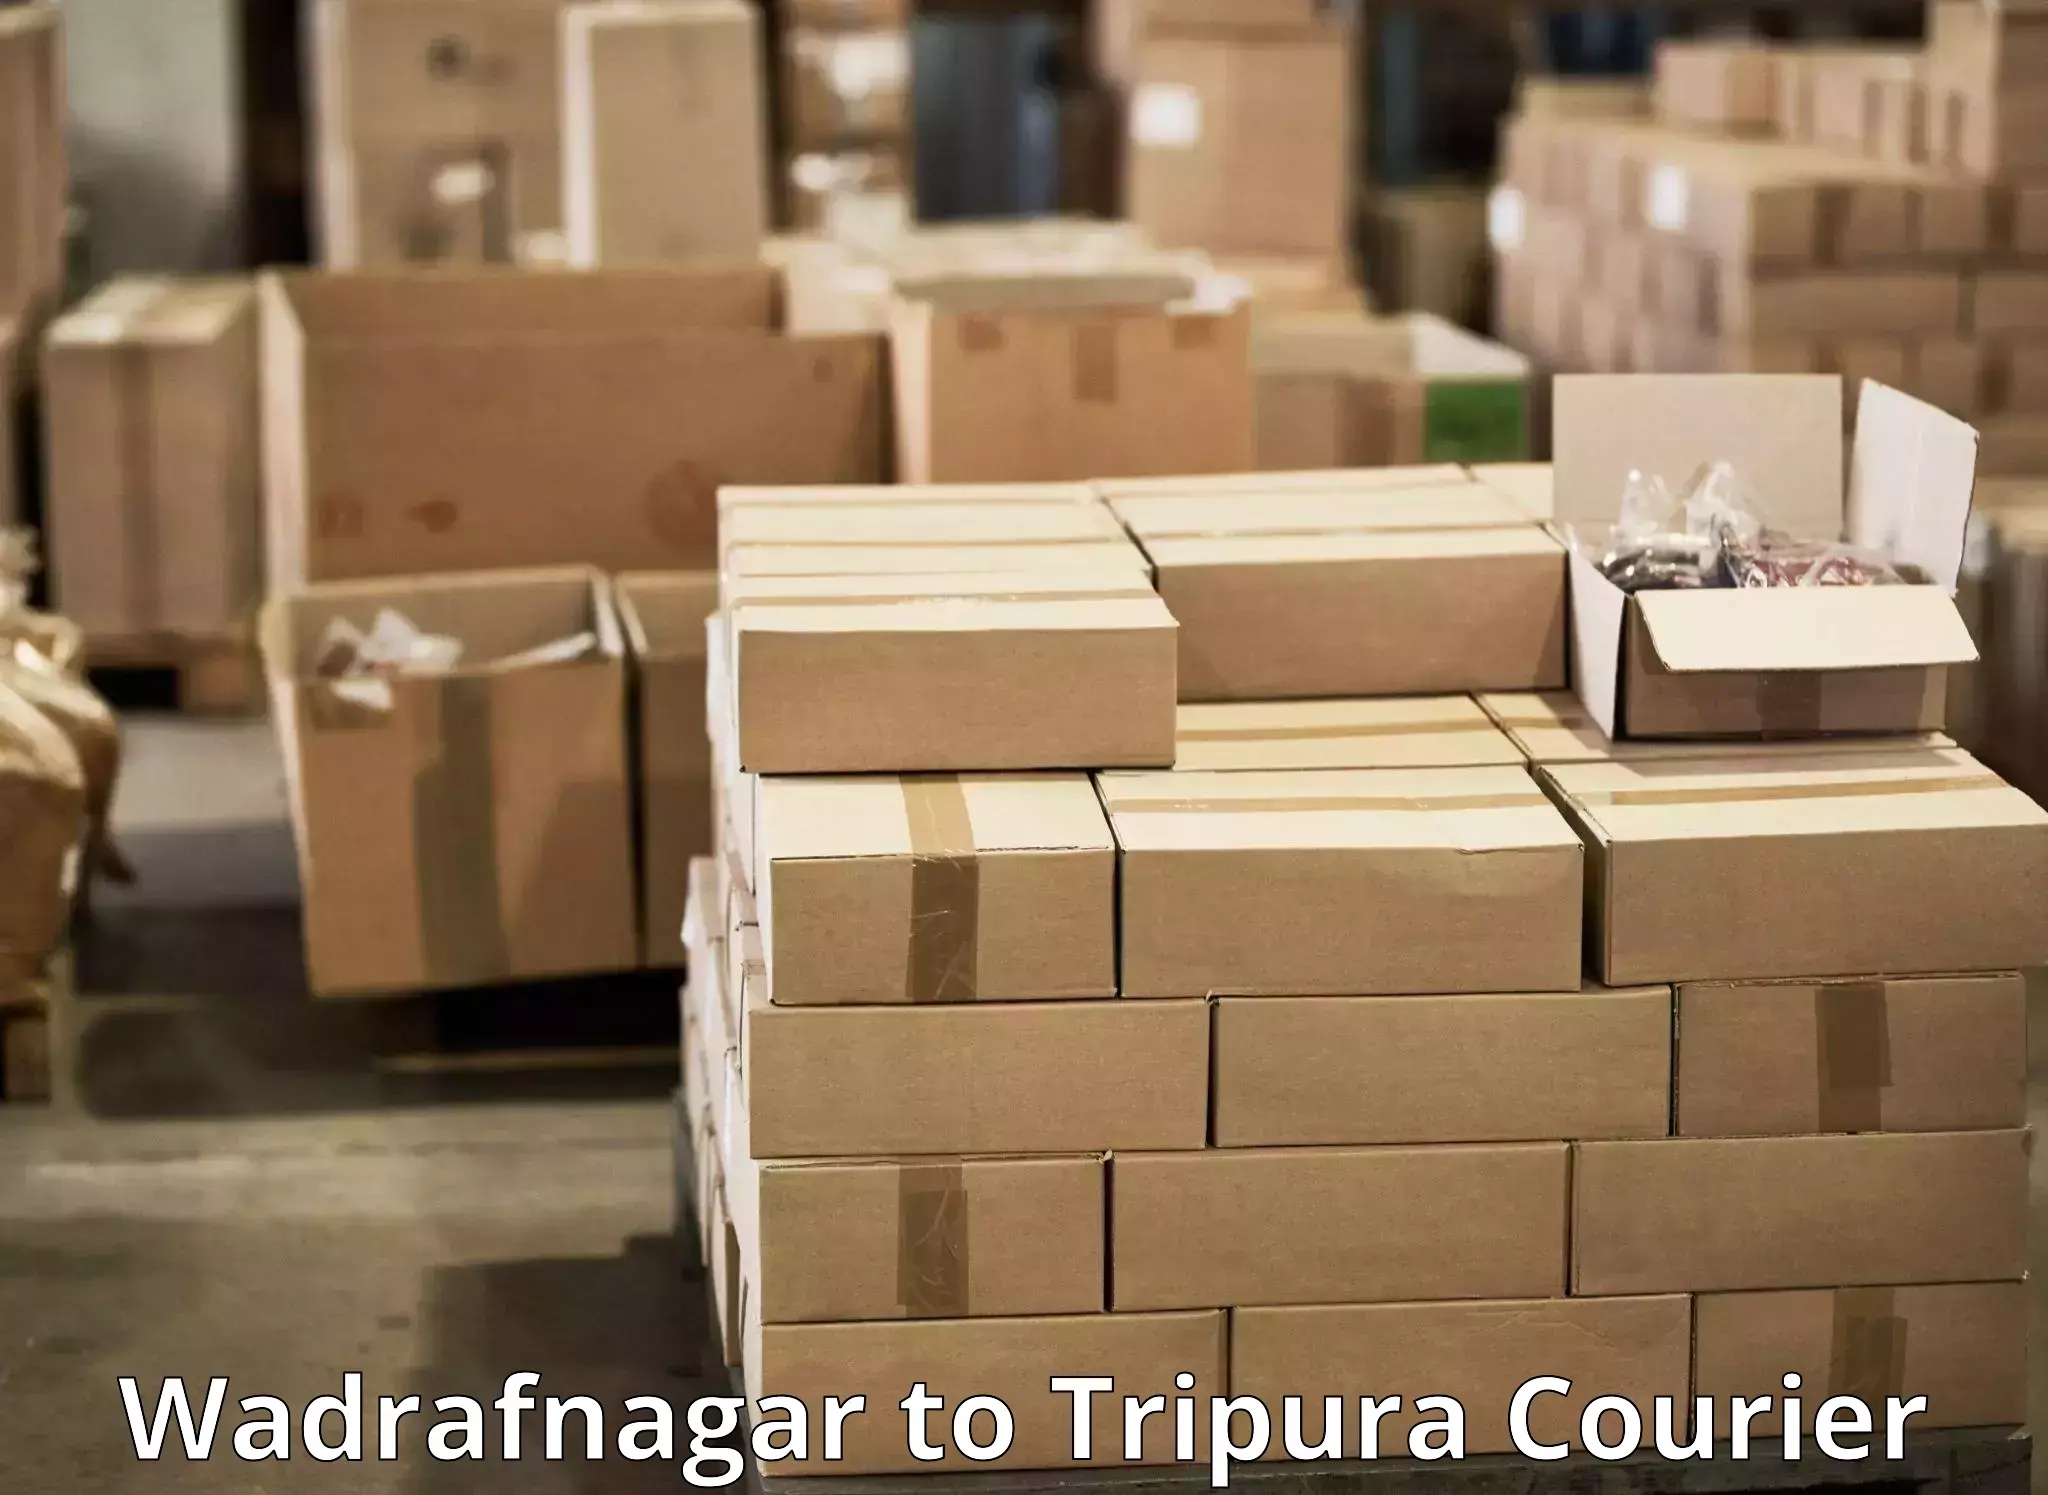 Optimized delivery routes Wadrafnagar to Tripura